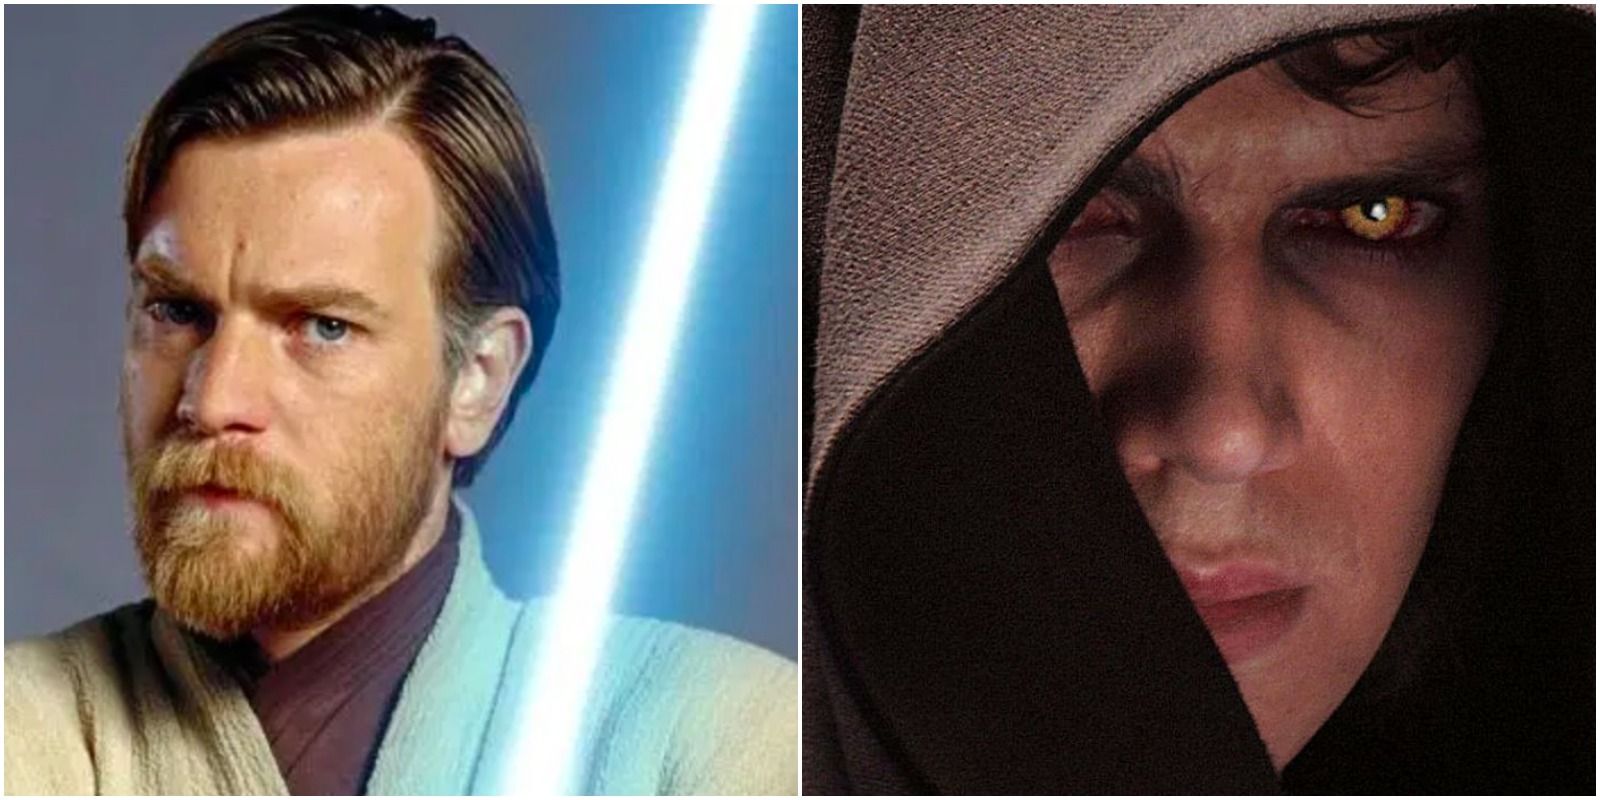 Obi-Wan Kenobi and Anakin Skywalker